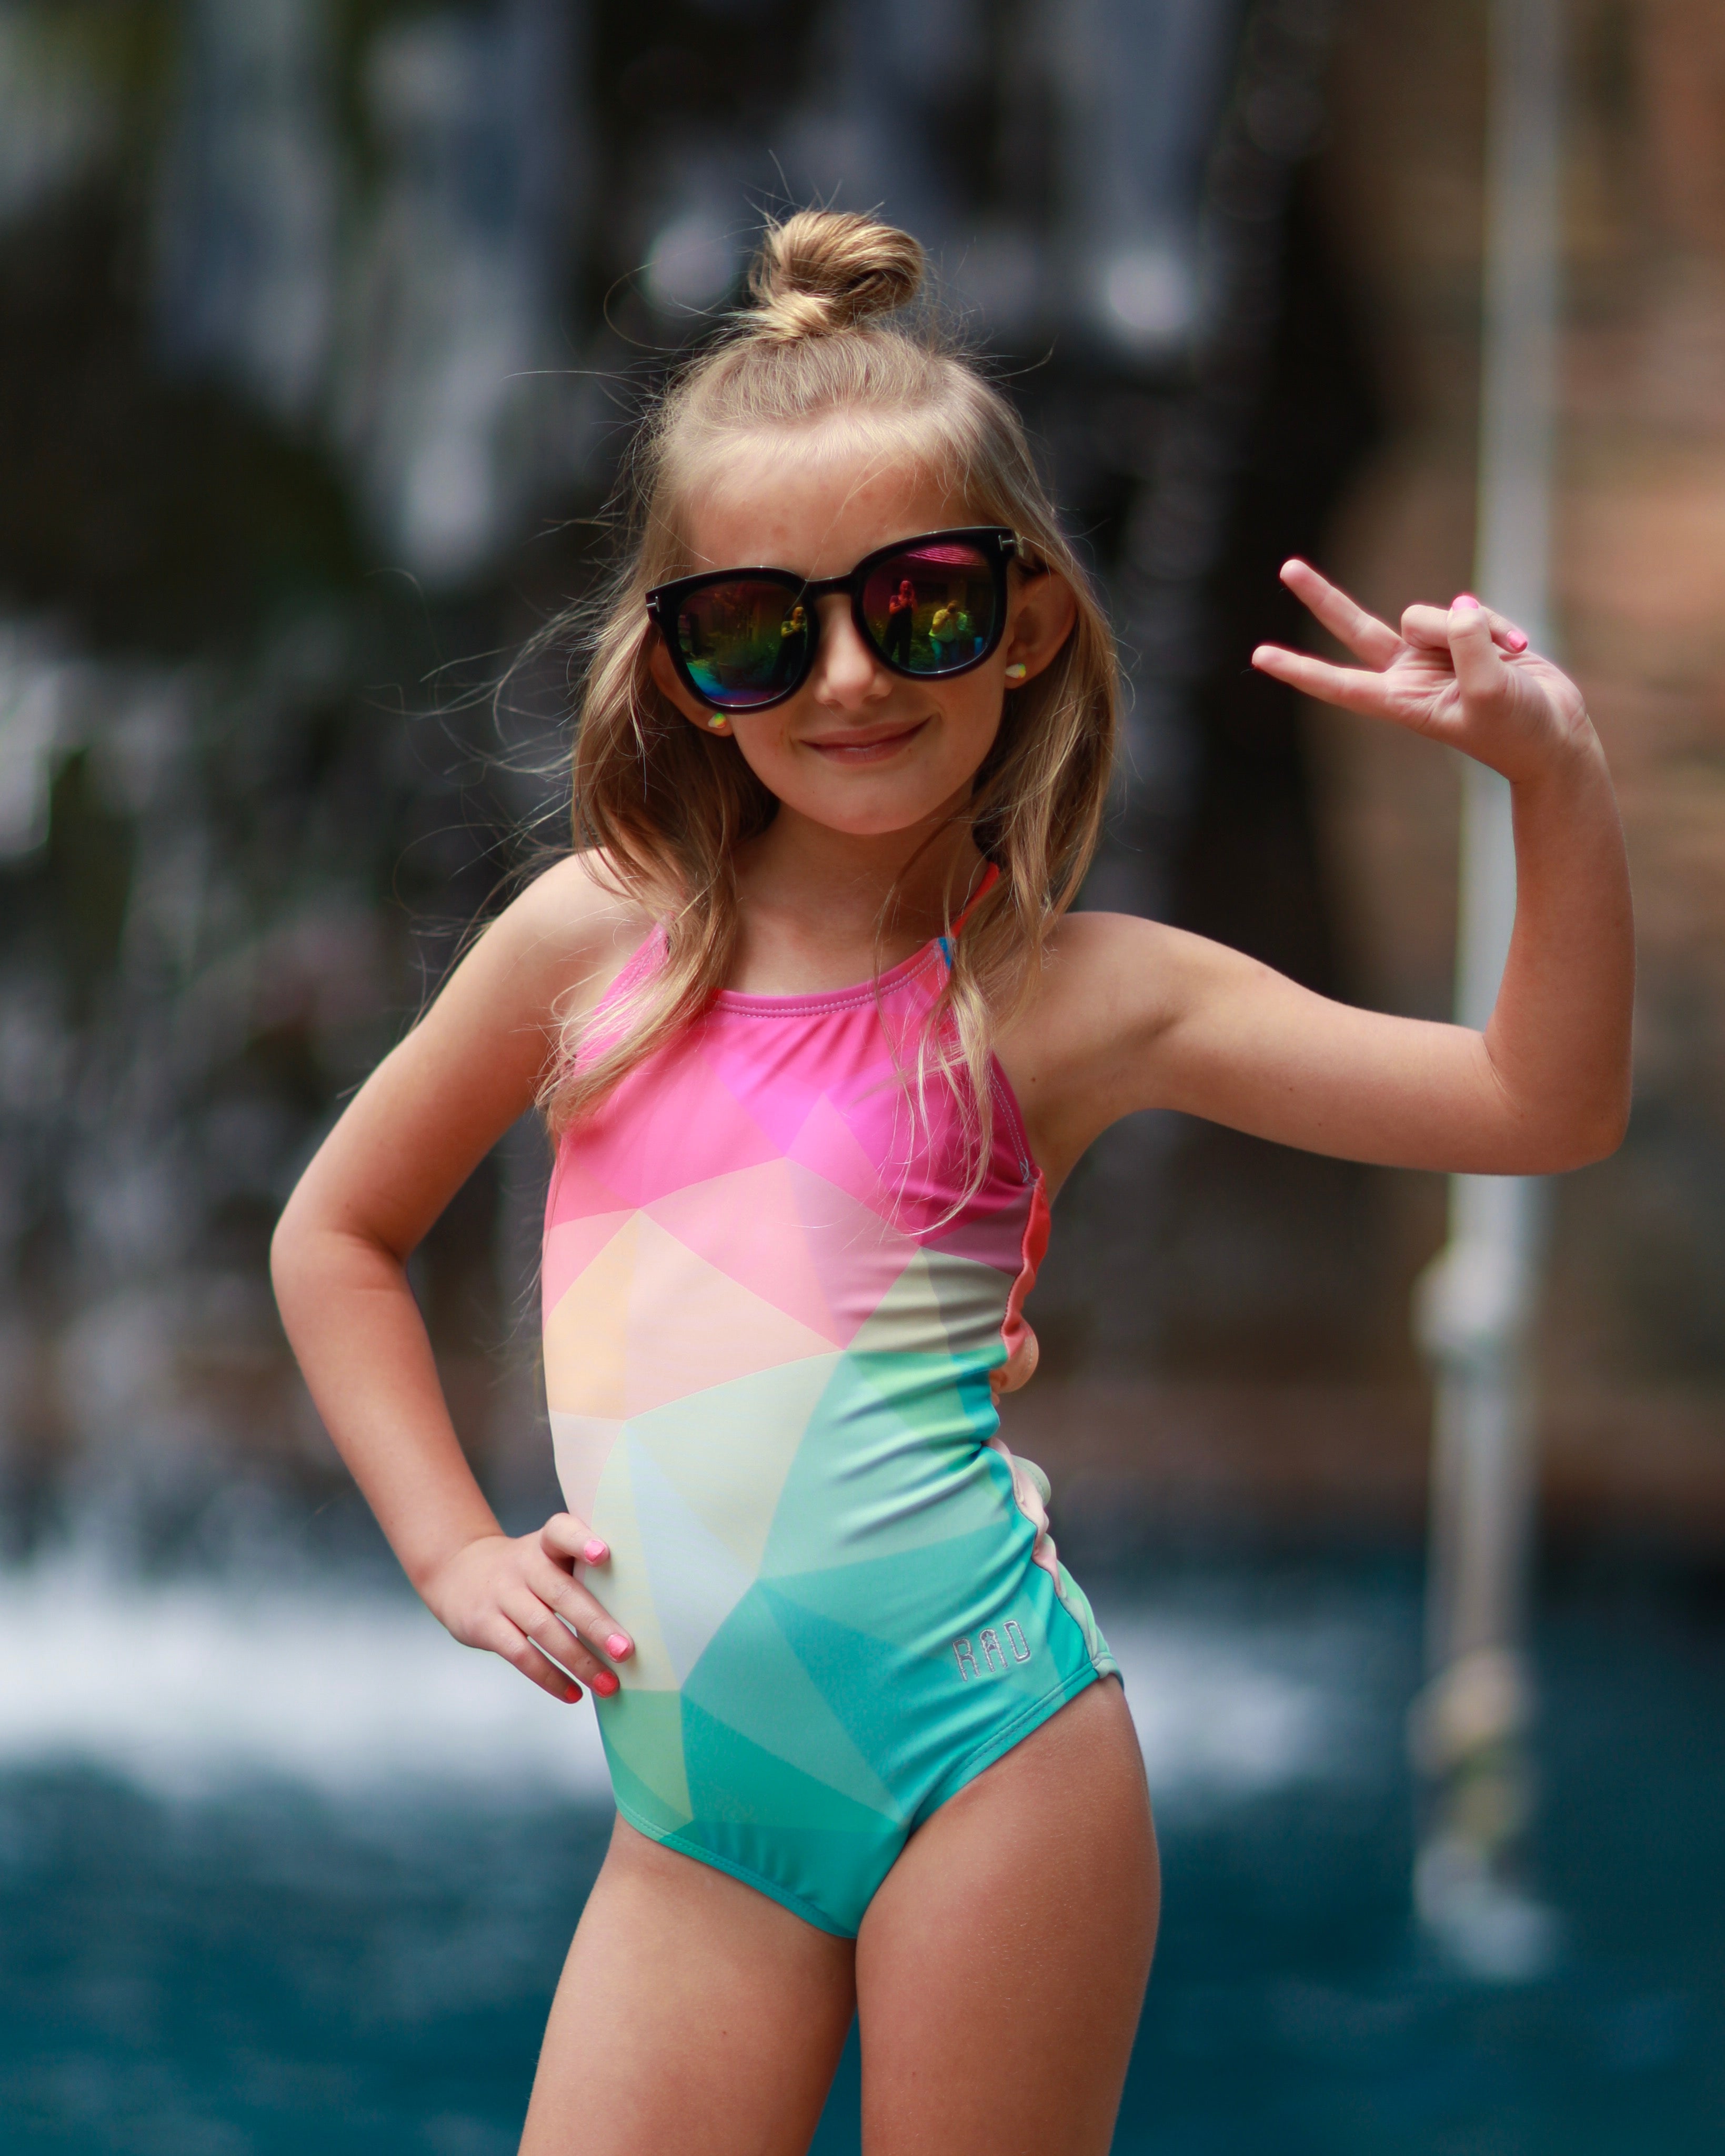 Rad Swim Womens One Piece Swimsuits Bathing Suits Tankinis teens Girls